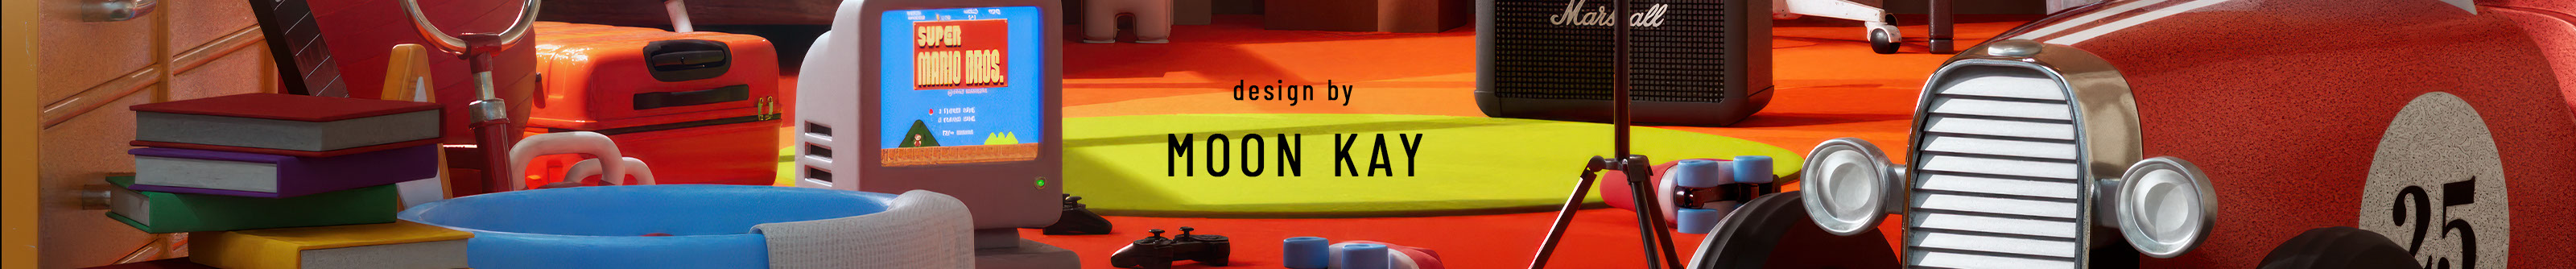 Moon Kay's profile banner